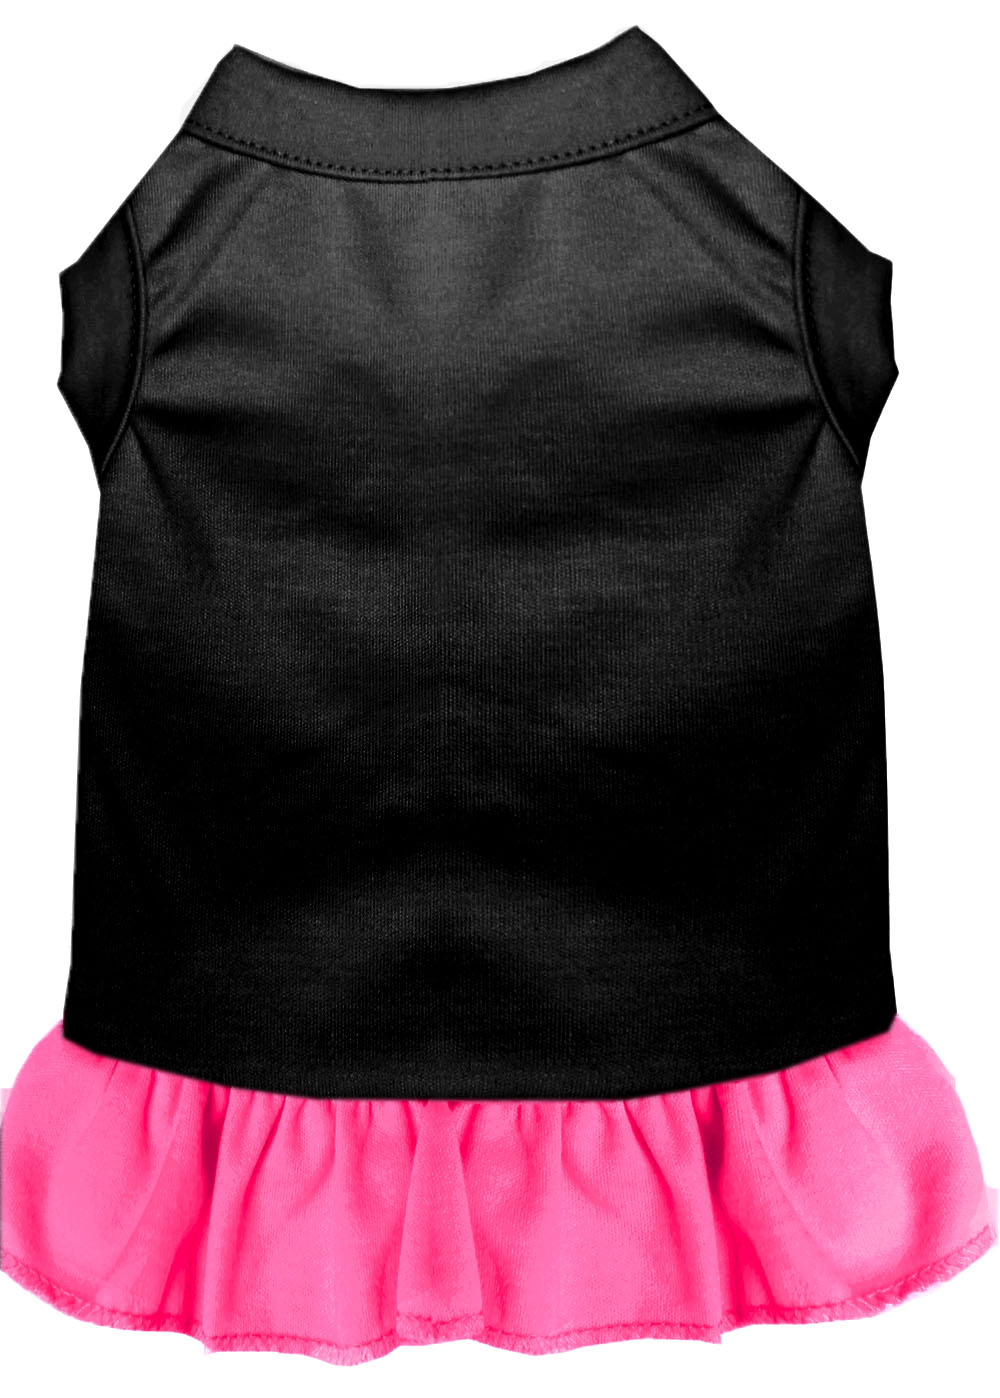 Plain Pet Dress Black with Bright Pink 4X